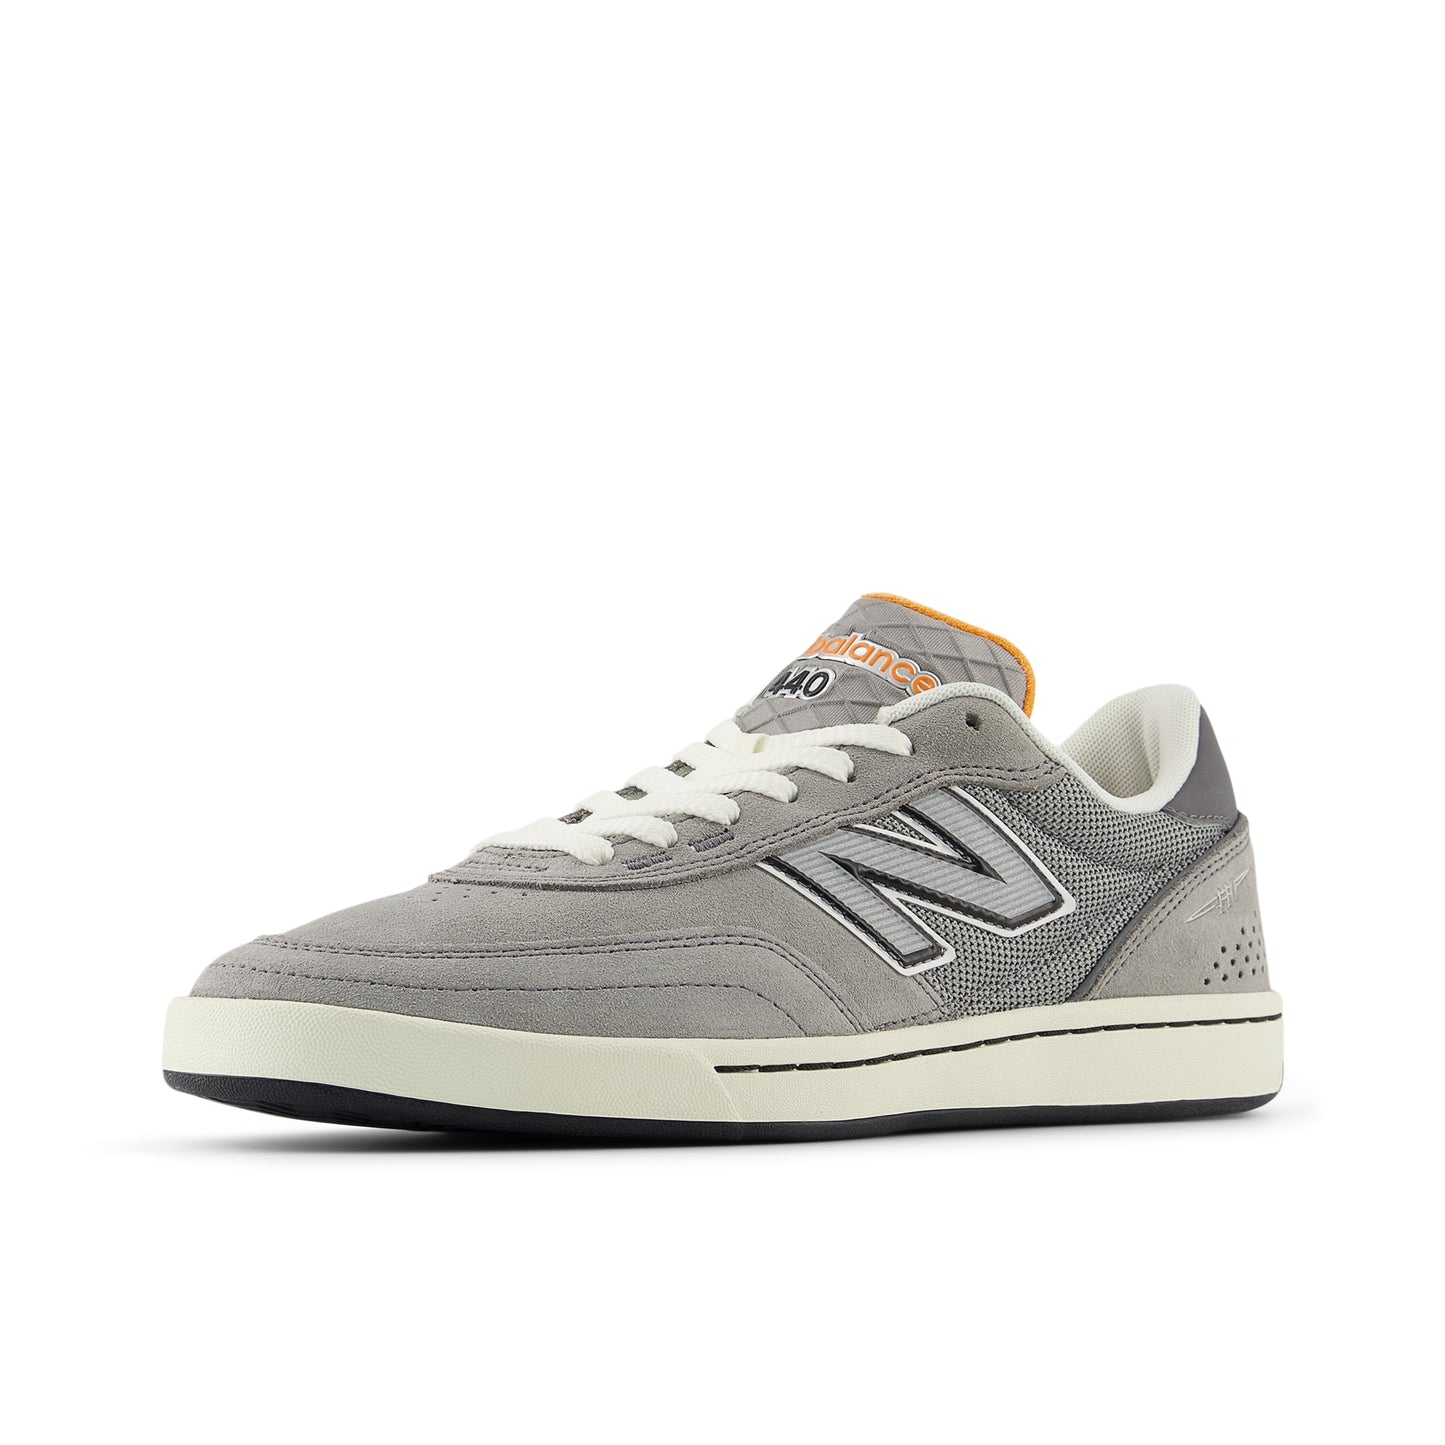 NB# 440 V2 - (Vu Skateshop) Grey Orange